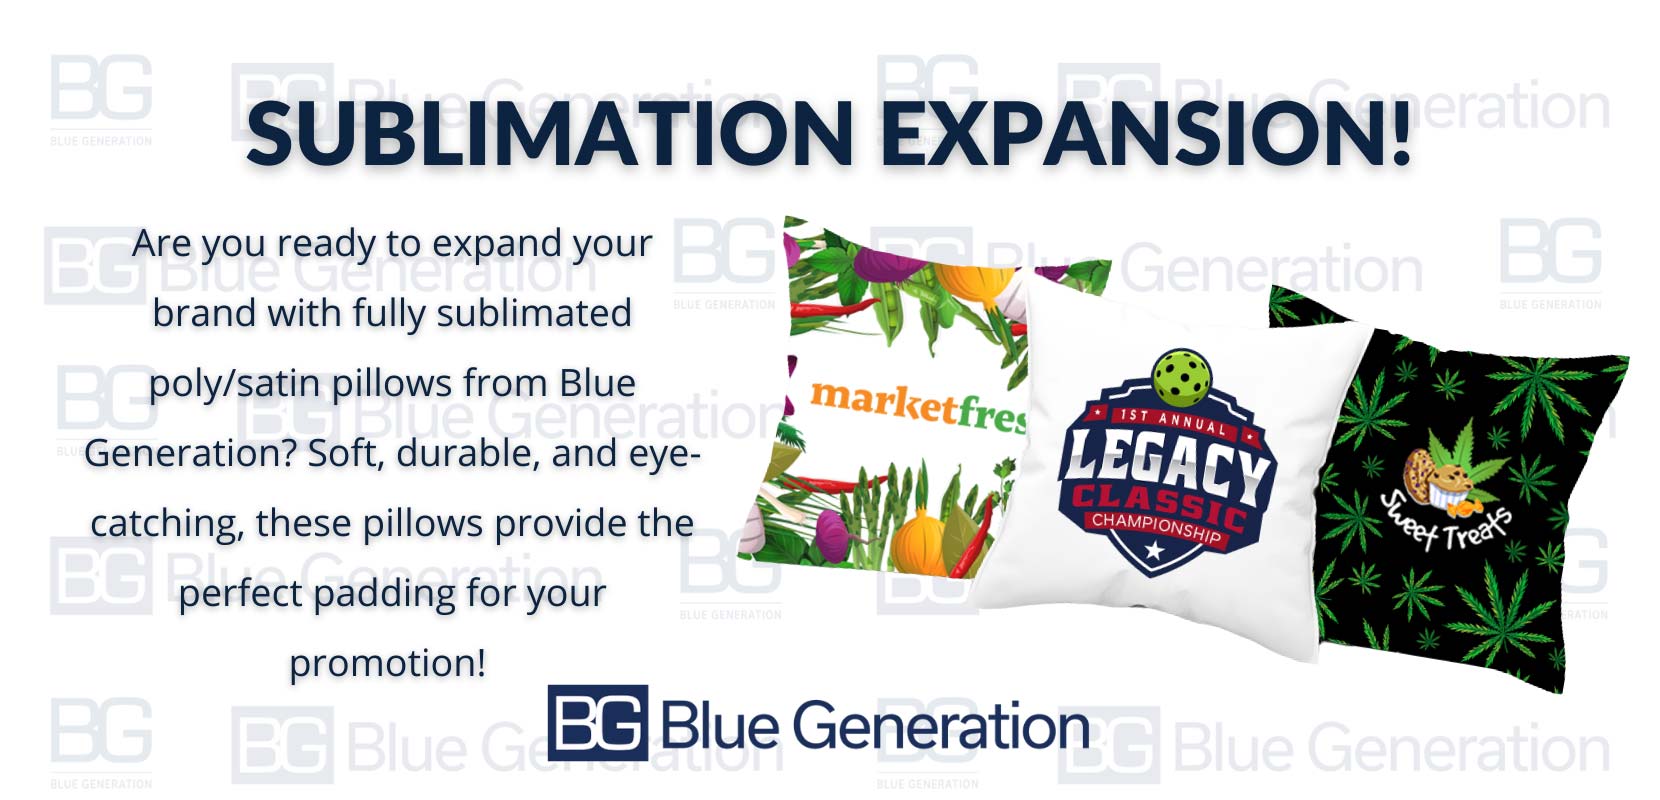 Blue Generation Sublimation Expansion